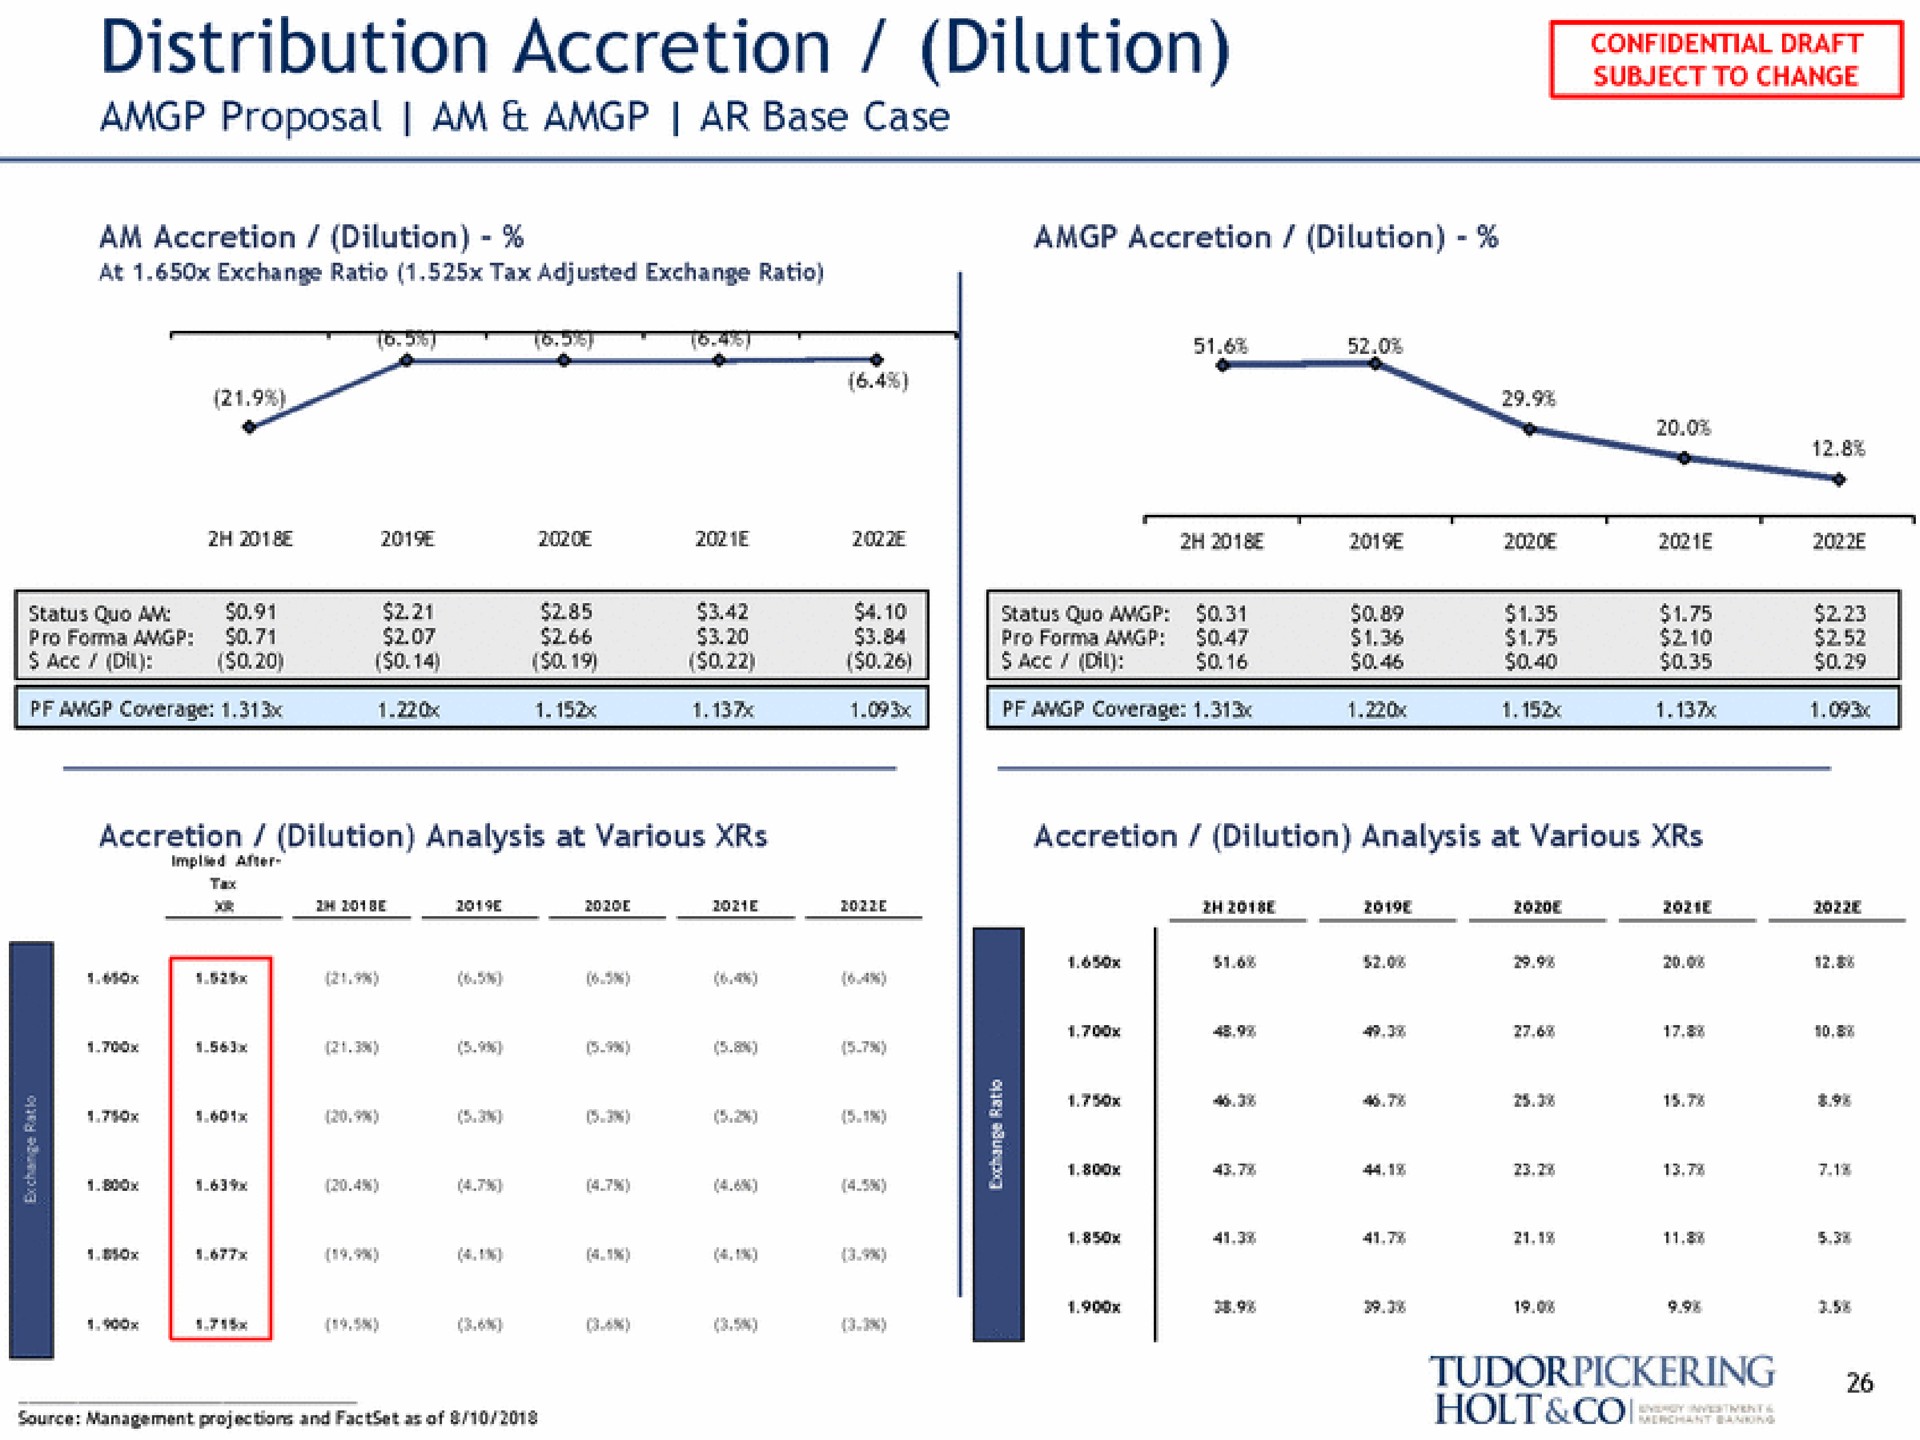 distribution accretion dilution proposal am base case a | Tudor, Pickering, Holt & Co